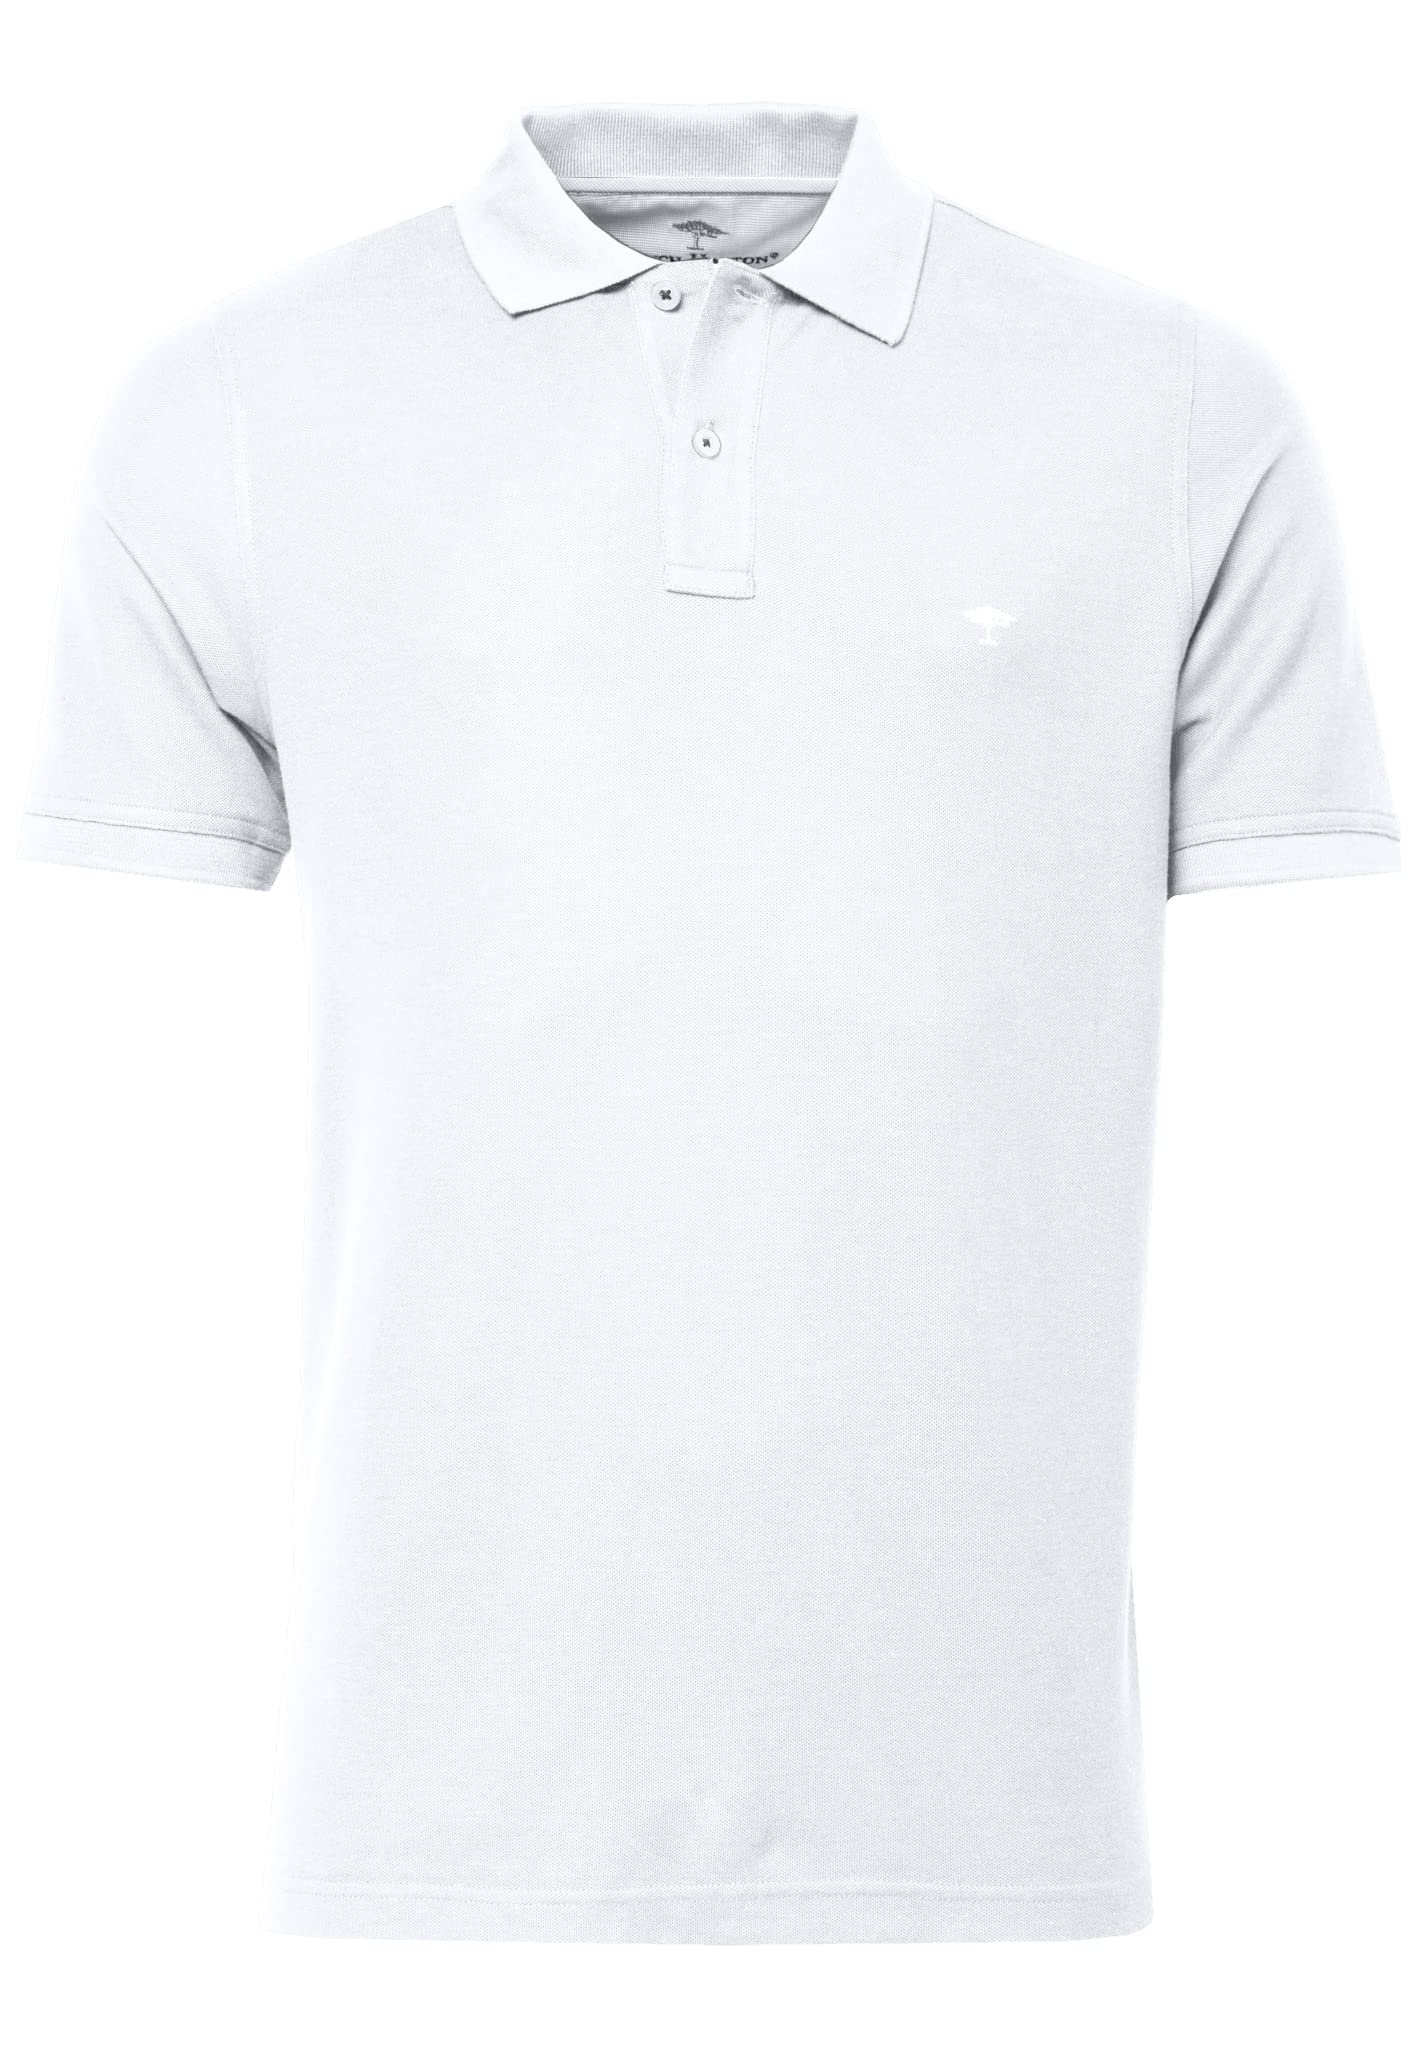 FYNCH-HATTON Poloshirt 10001700 - Herren Poloshirt Kurzarm White L